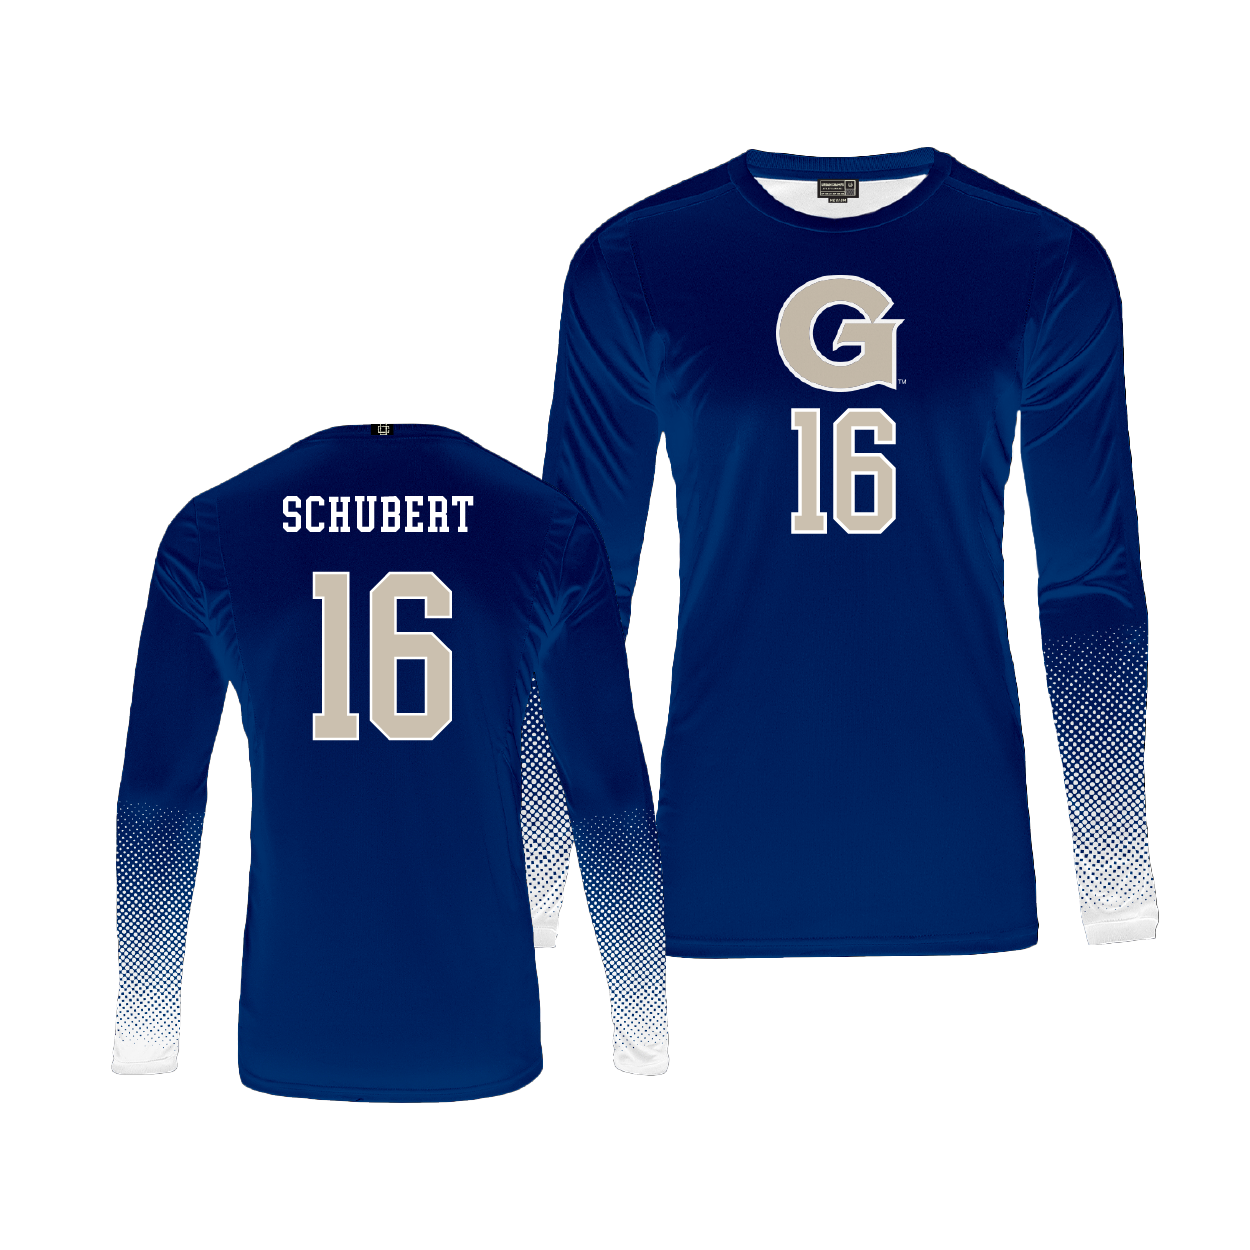 Georgetown Volleyball Navy Jersey - Lydia Schubert